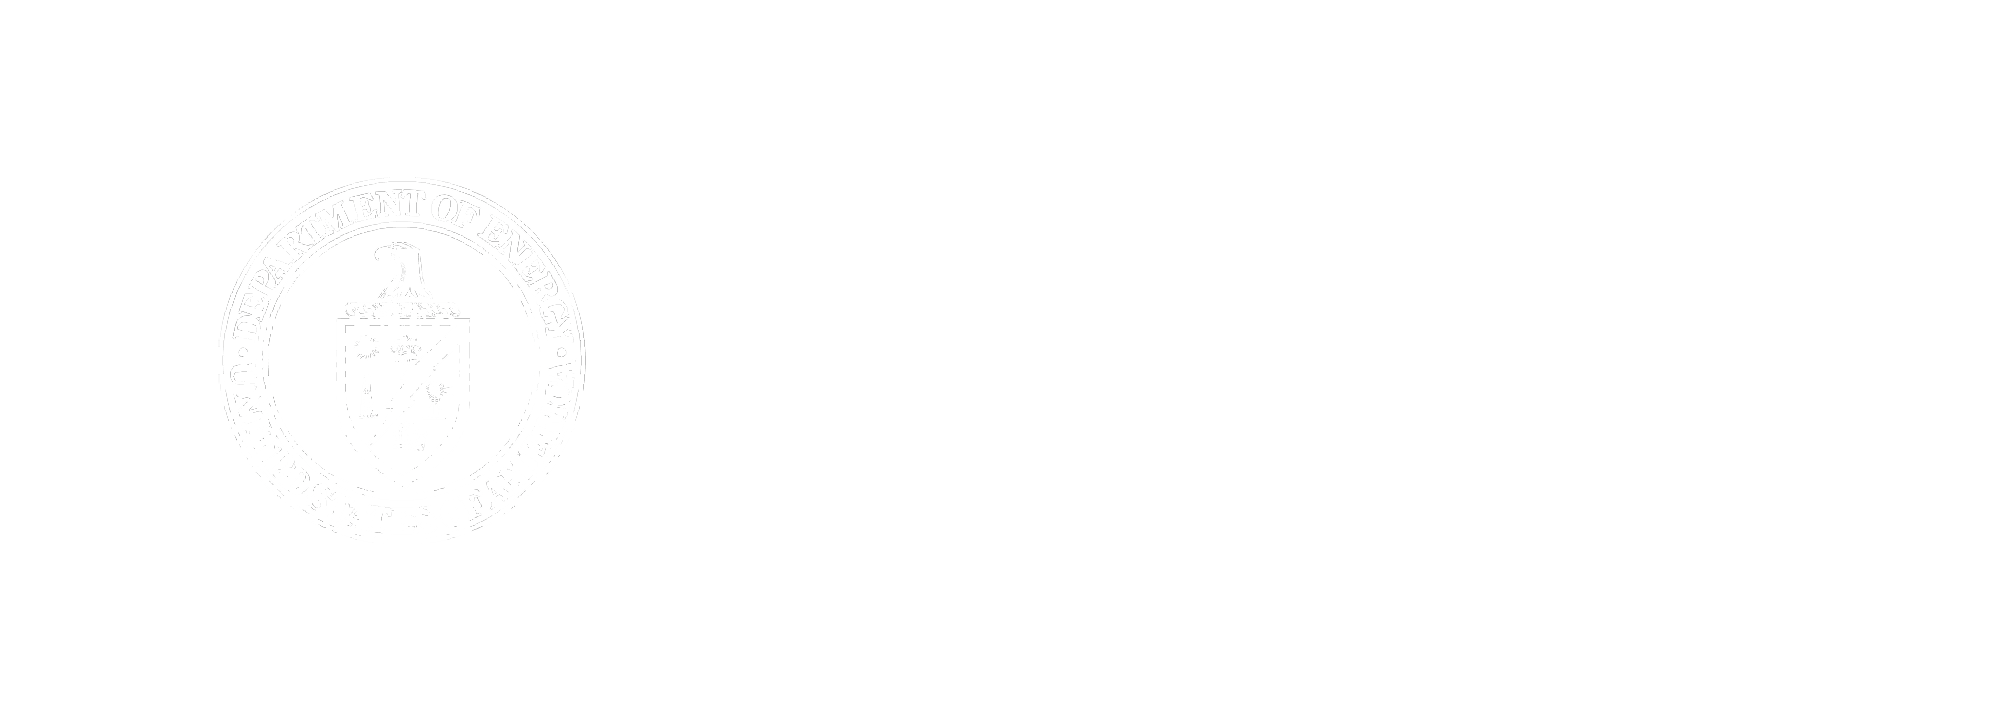 NNSA Logo - Home